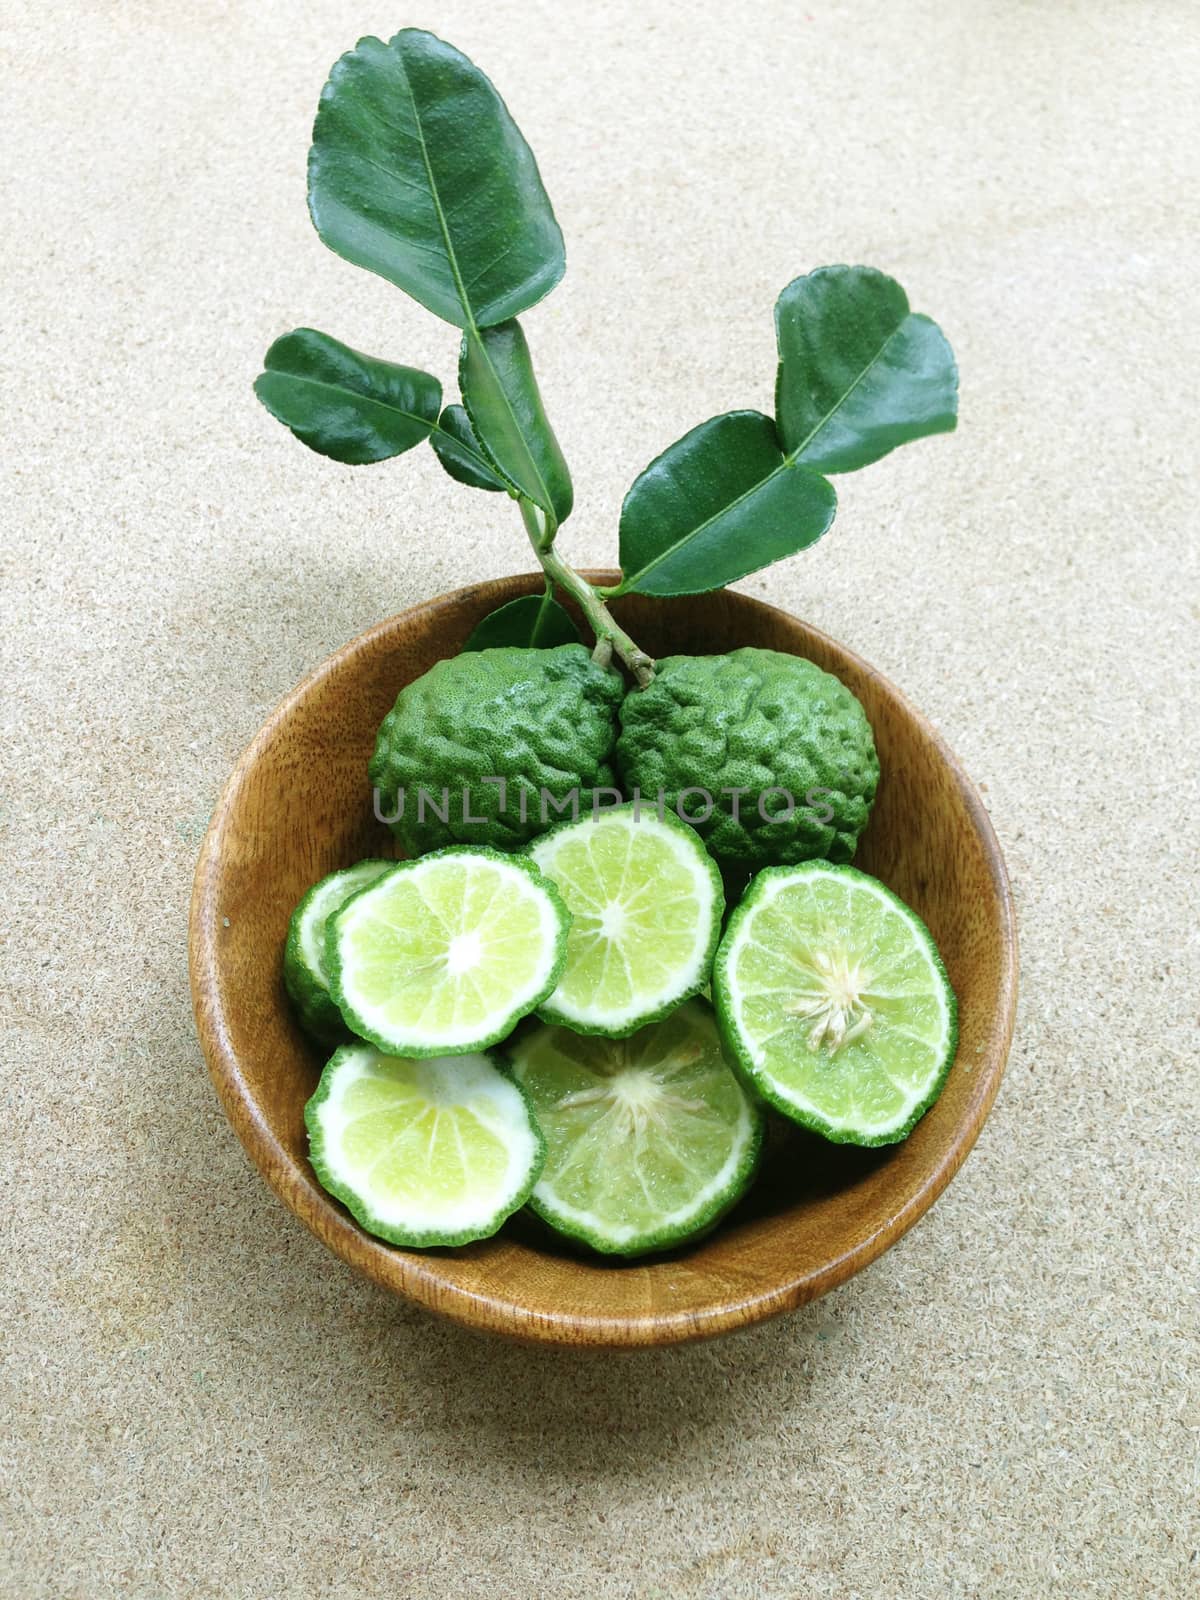 Kaffir Lime or Bergamot in wooden bowl on plywood background